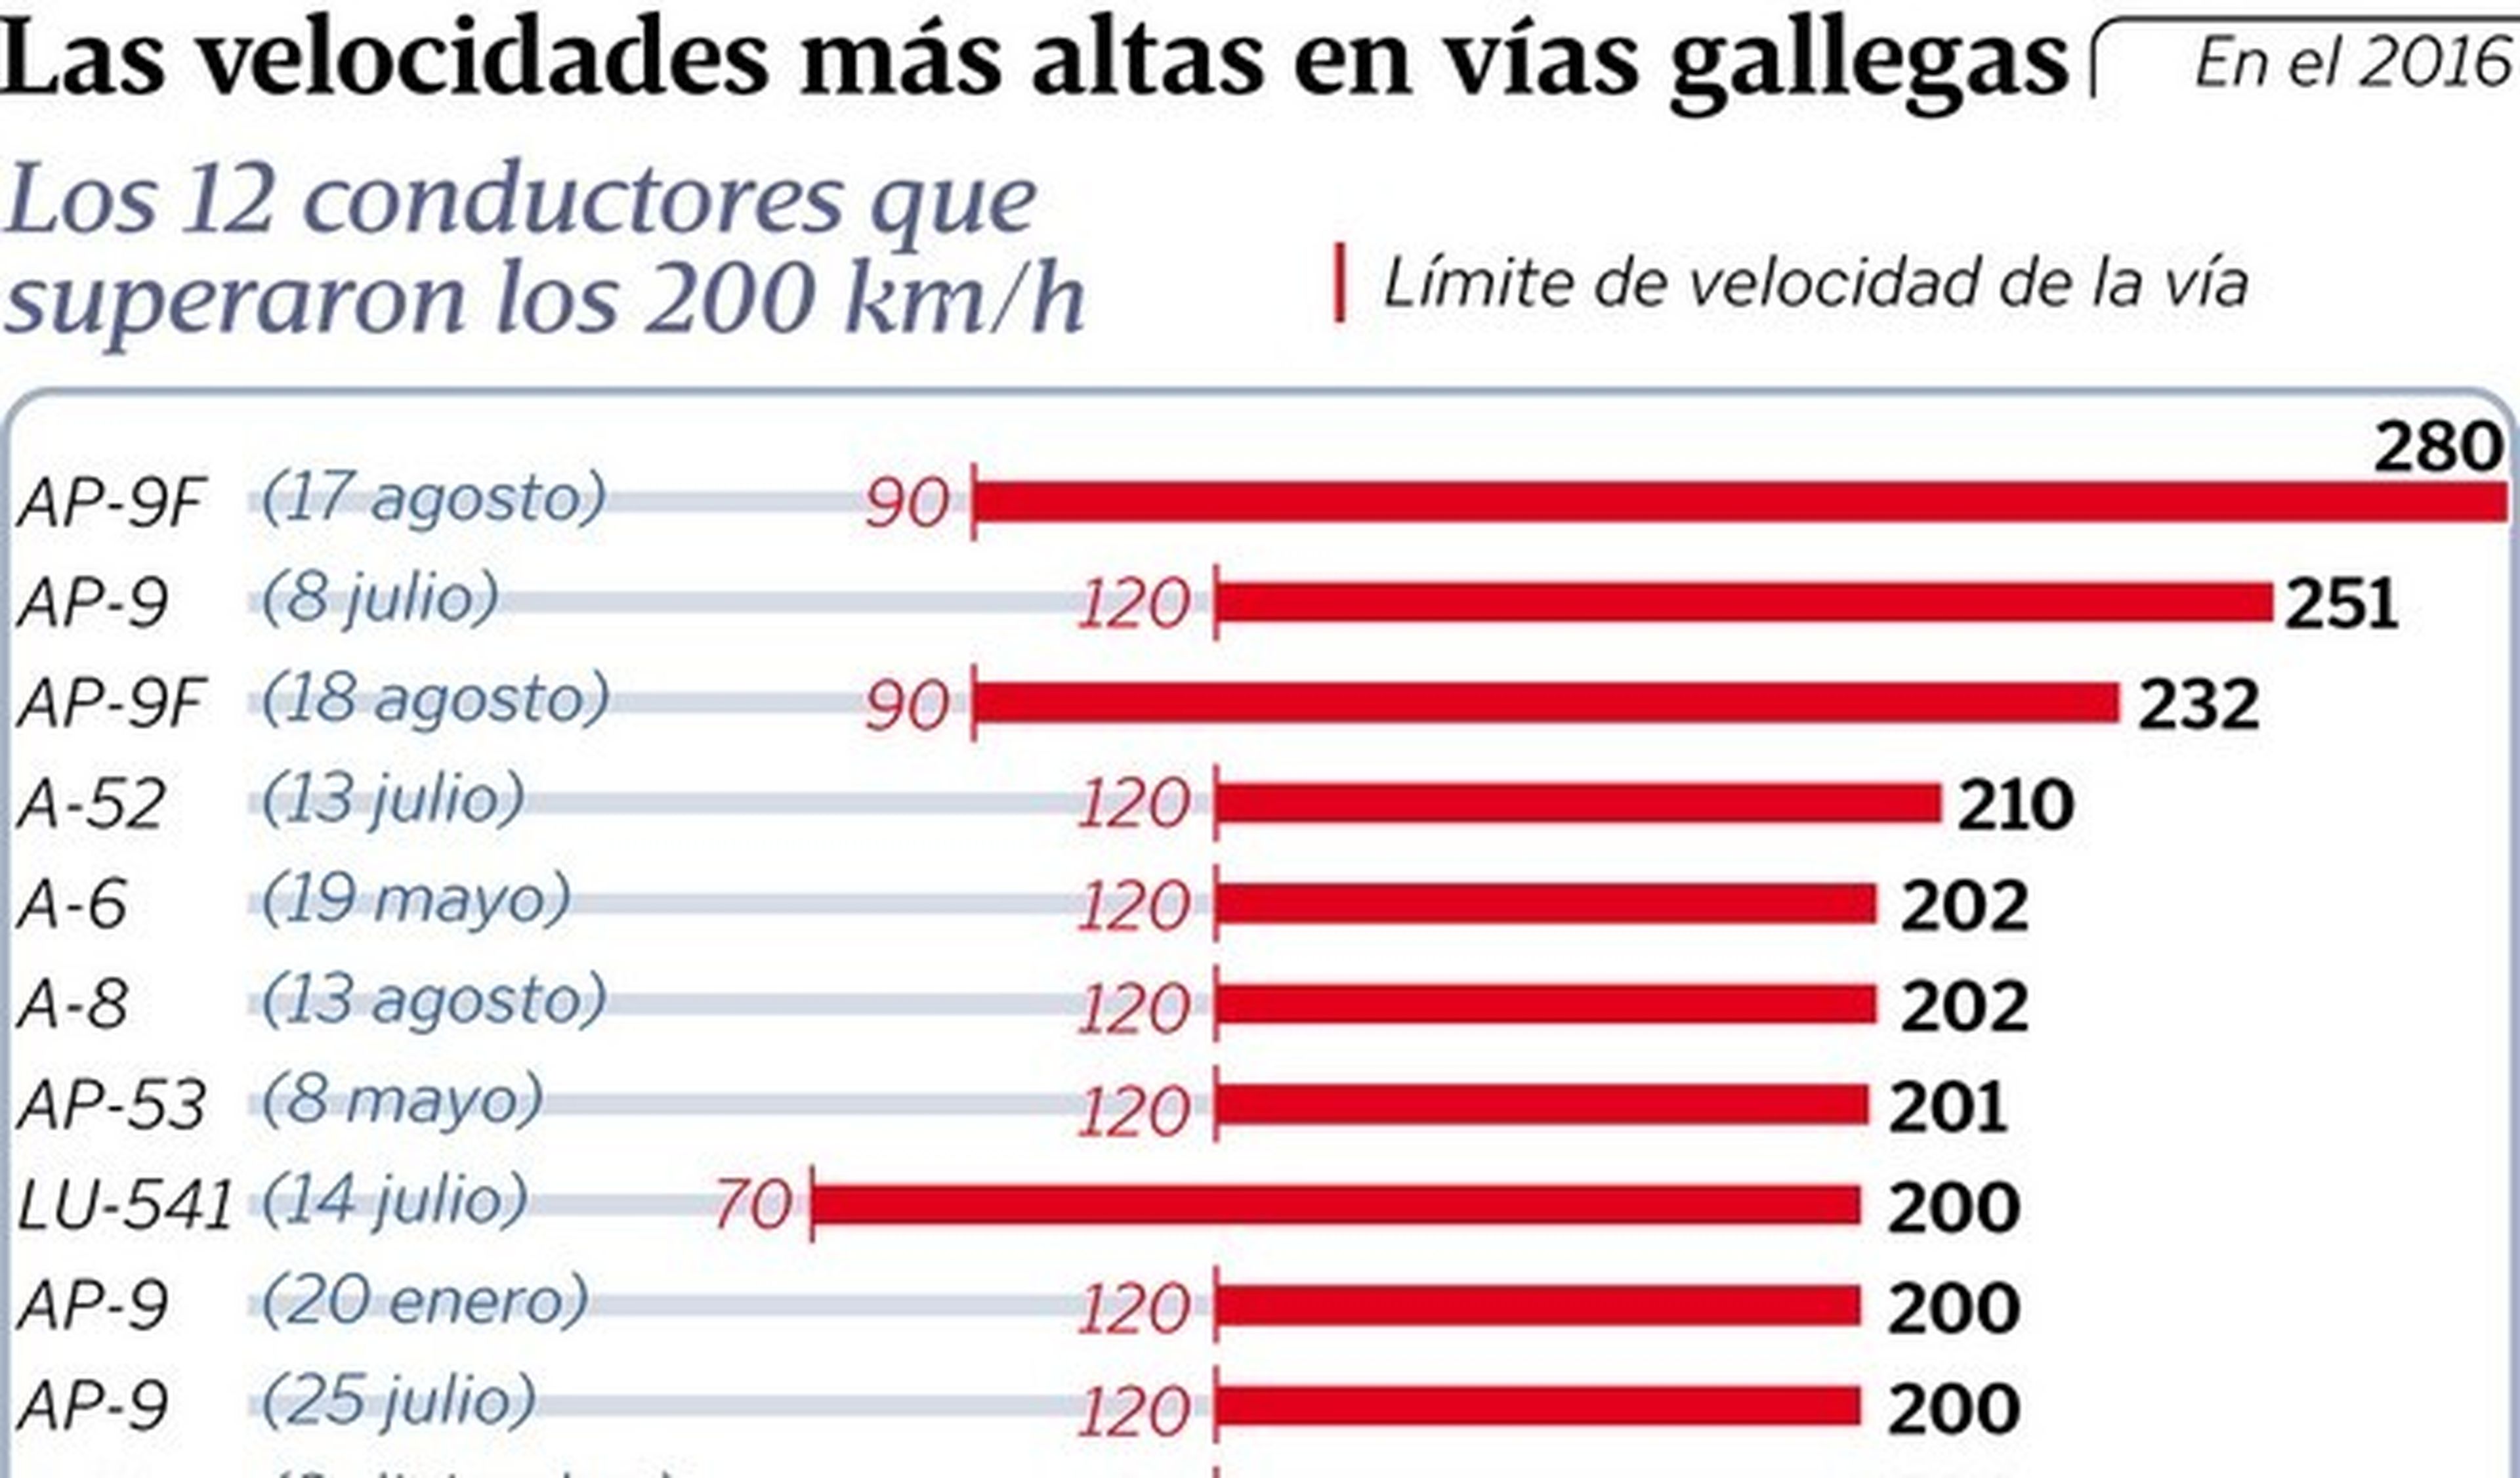 Cazado a 280 km/h, récord de velocidad en Galicia